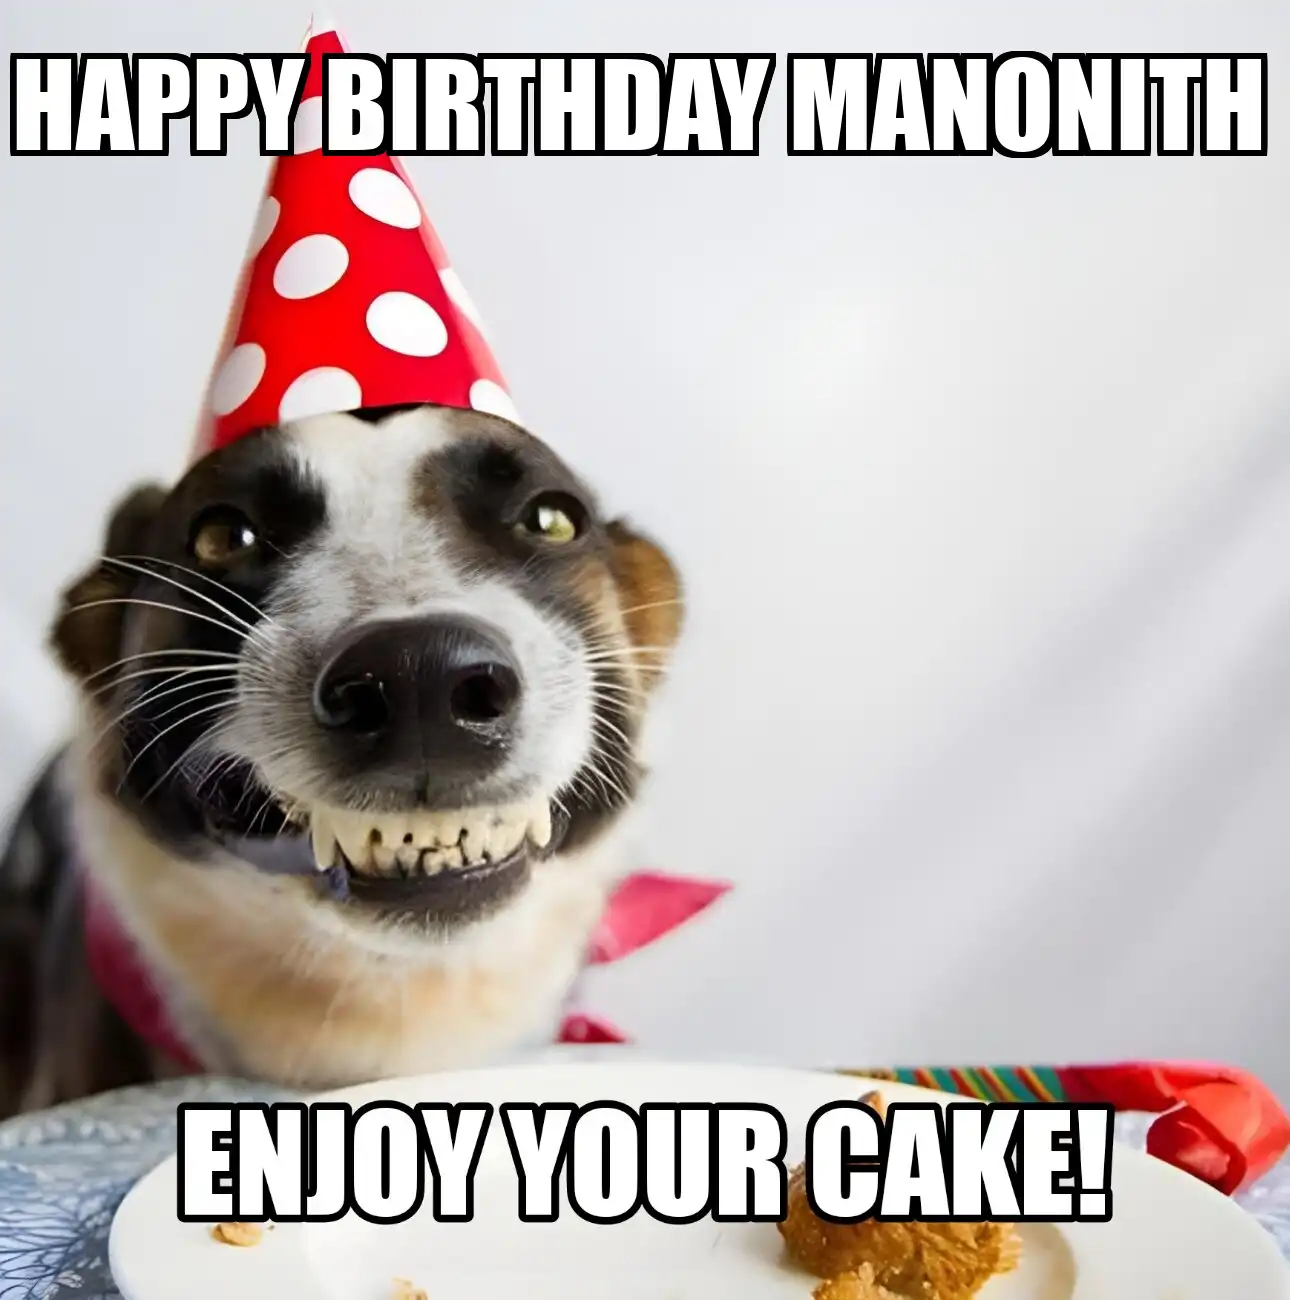 Happy Birthday Manonith Enjoy Your Cake Dog Meme